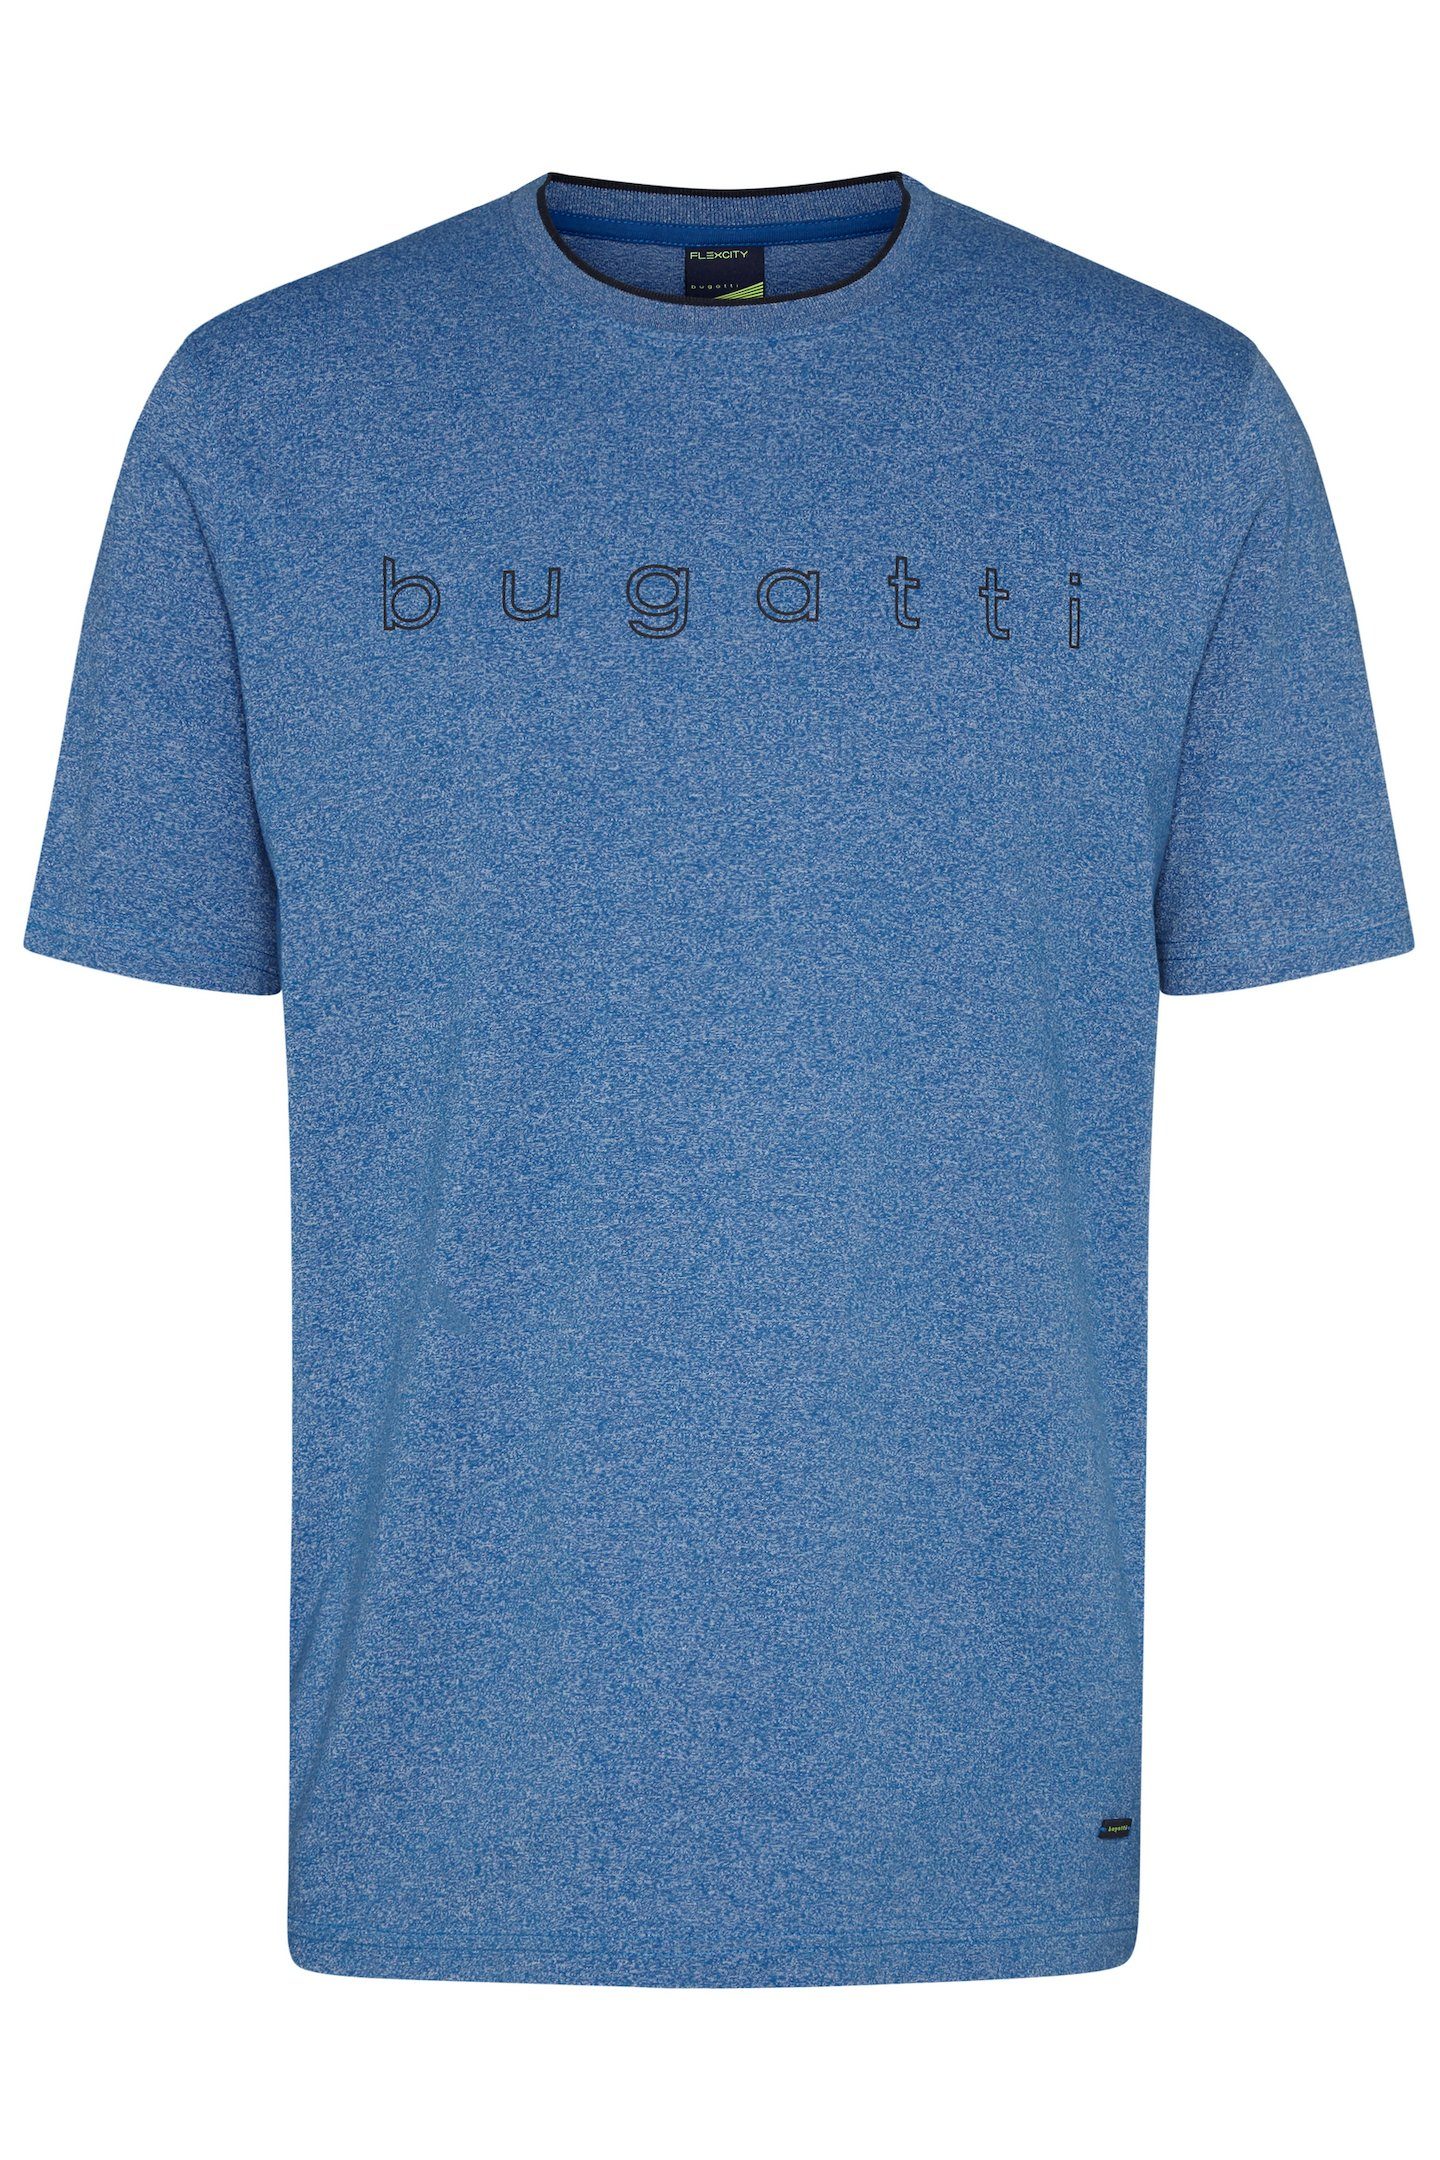 bugatti T-Shirt großem blau Logo-Print mit bugatti